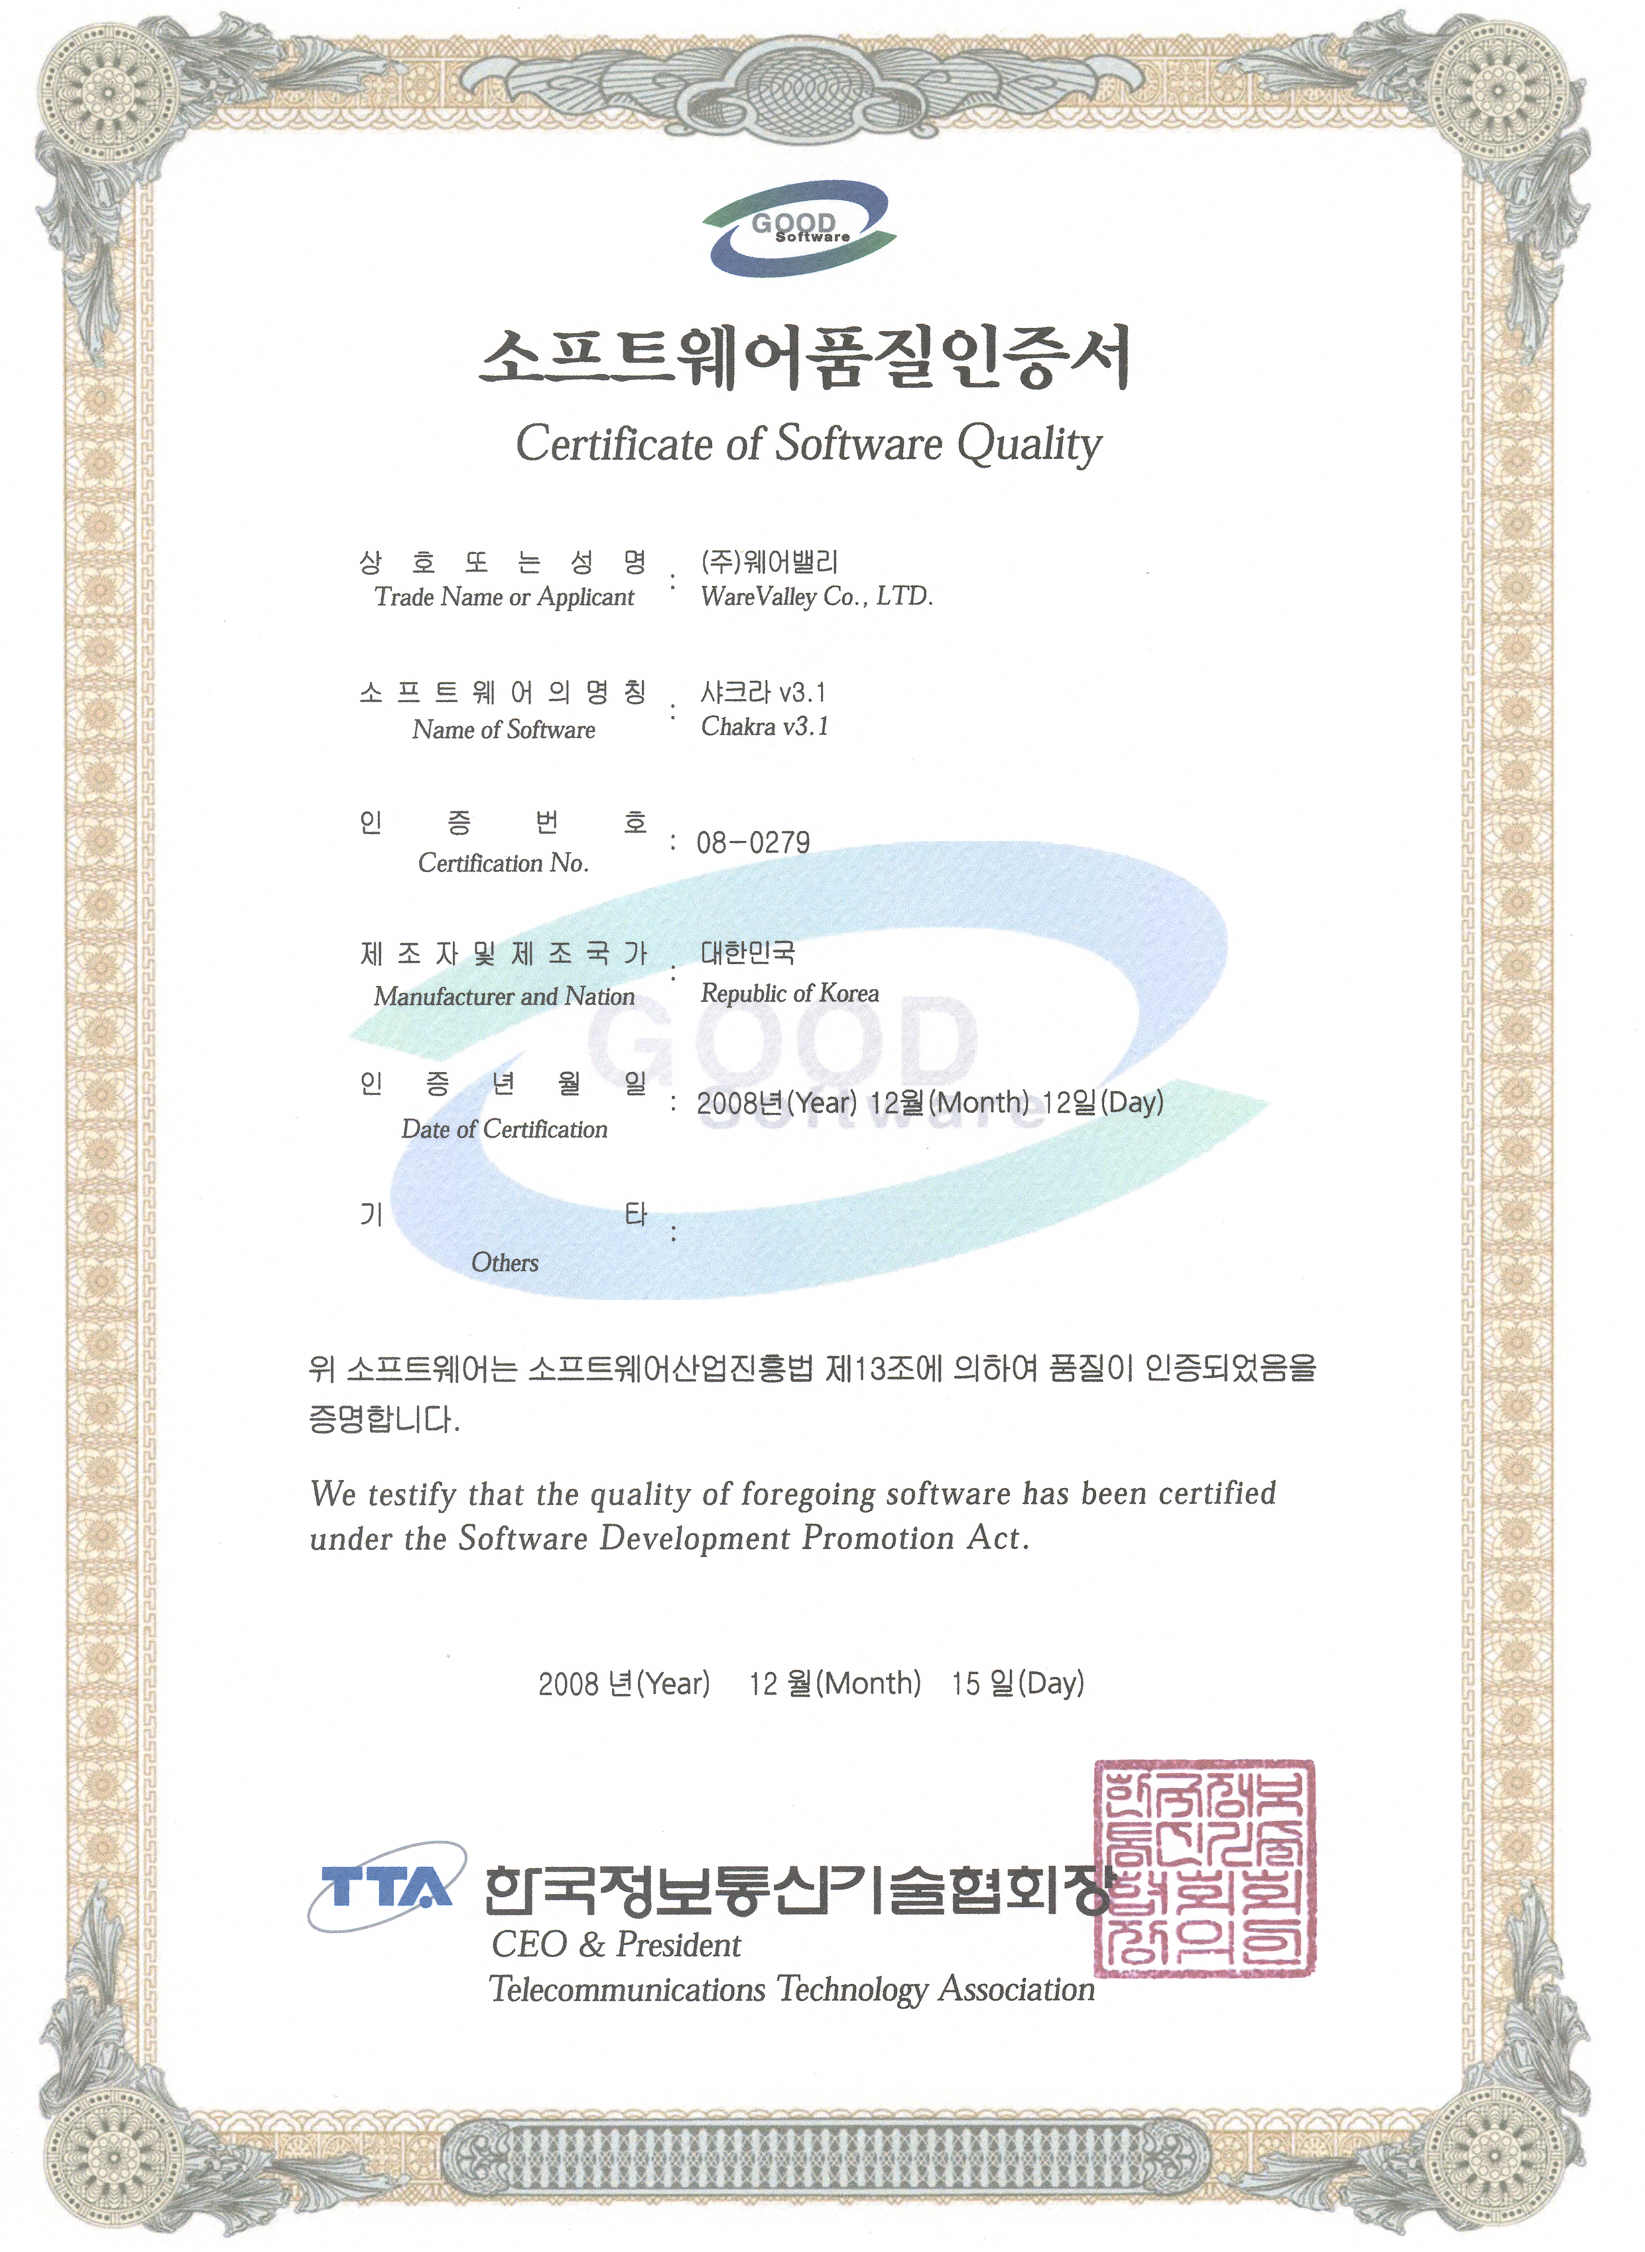 GS certification 08-0279